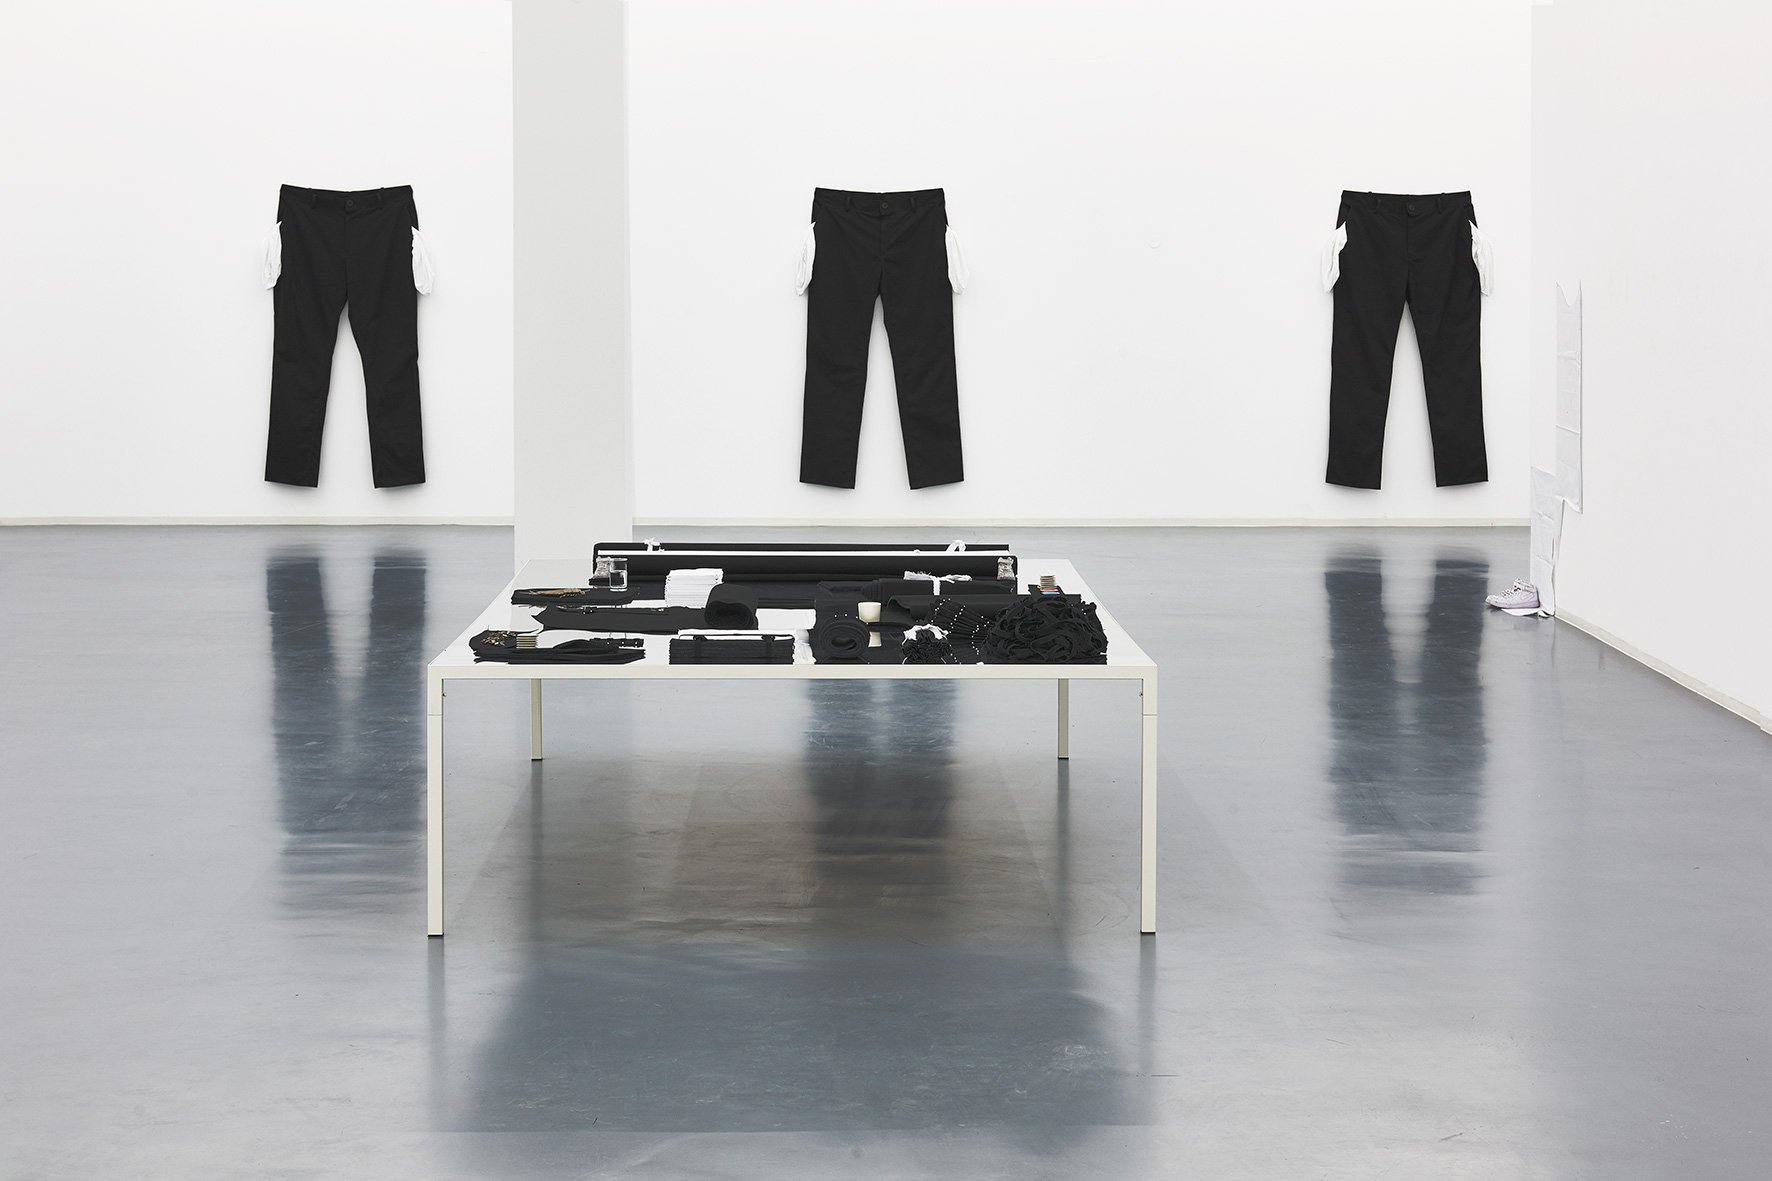 Amanda Ross-Ho, installation view, 2017, Bonner Kunstverein. Photo: Mareike Tocha